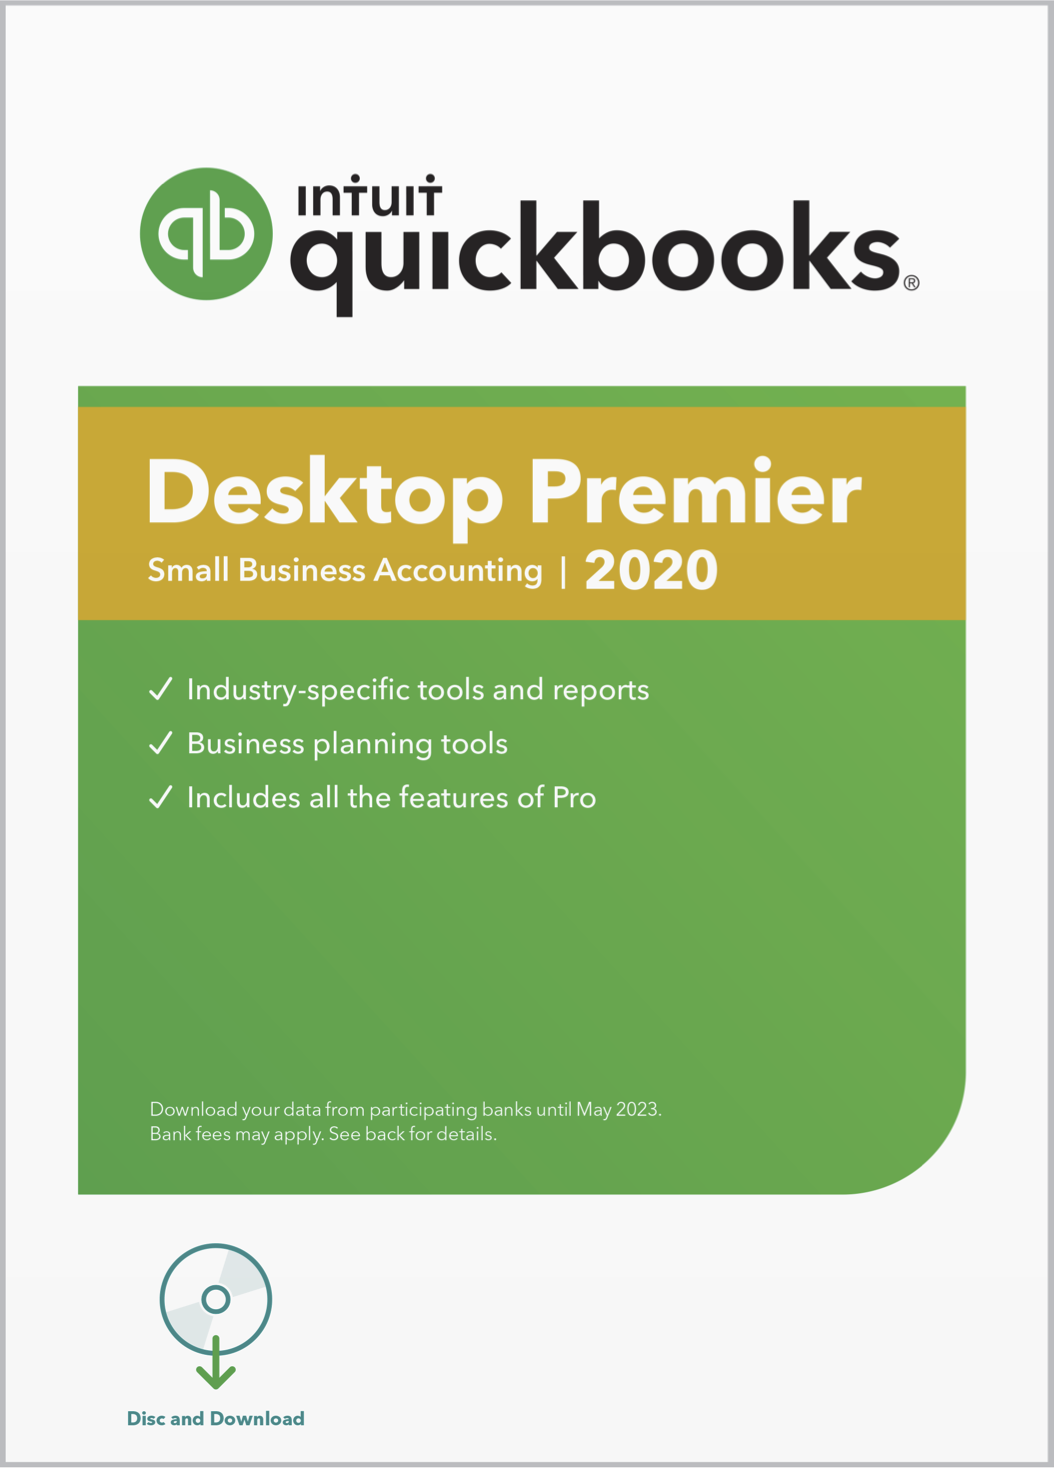 quickbooks desktop premier contractor edition 2020